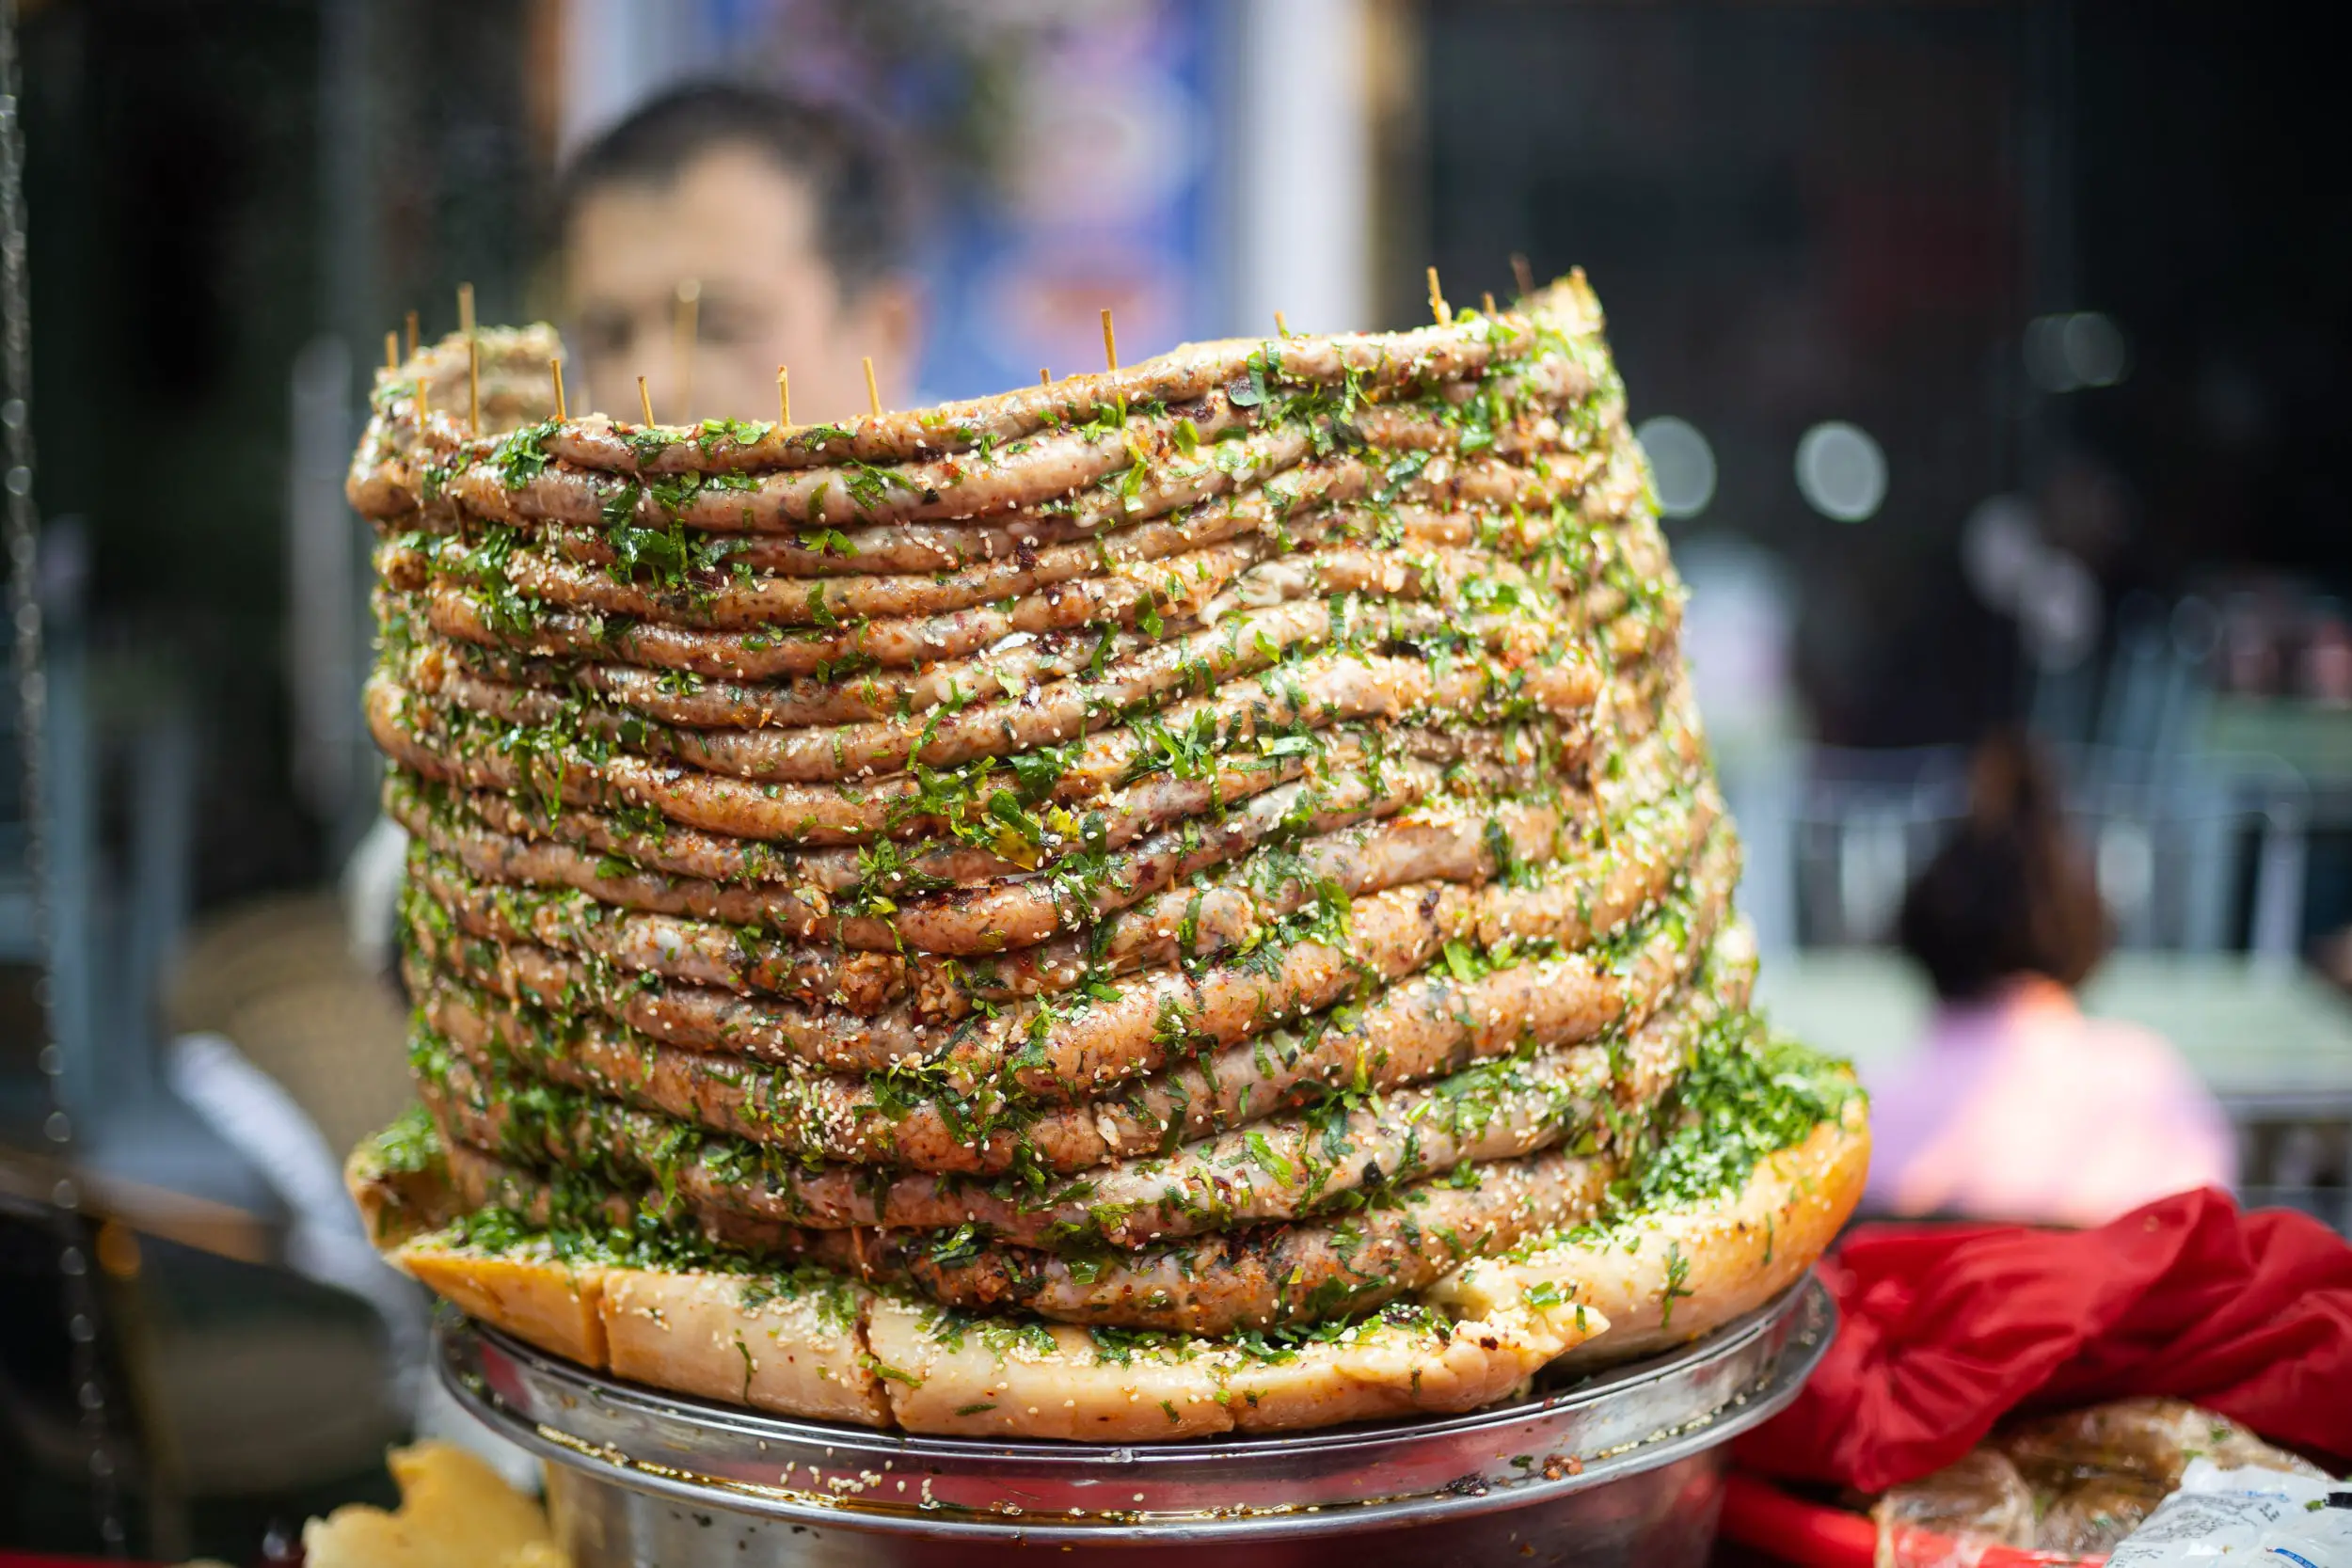 Kashgar street food